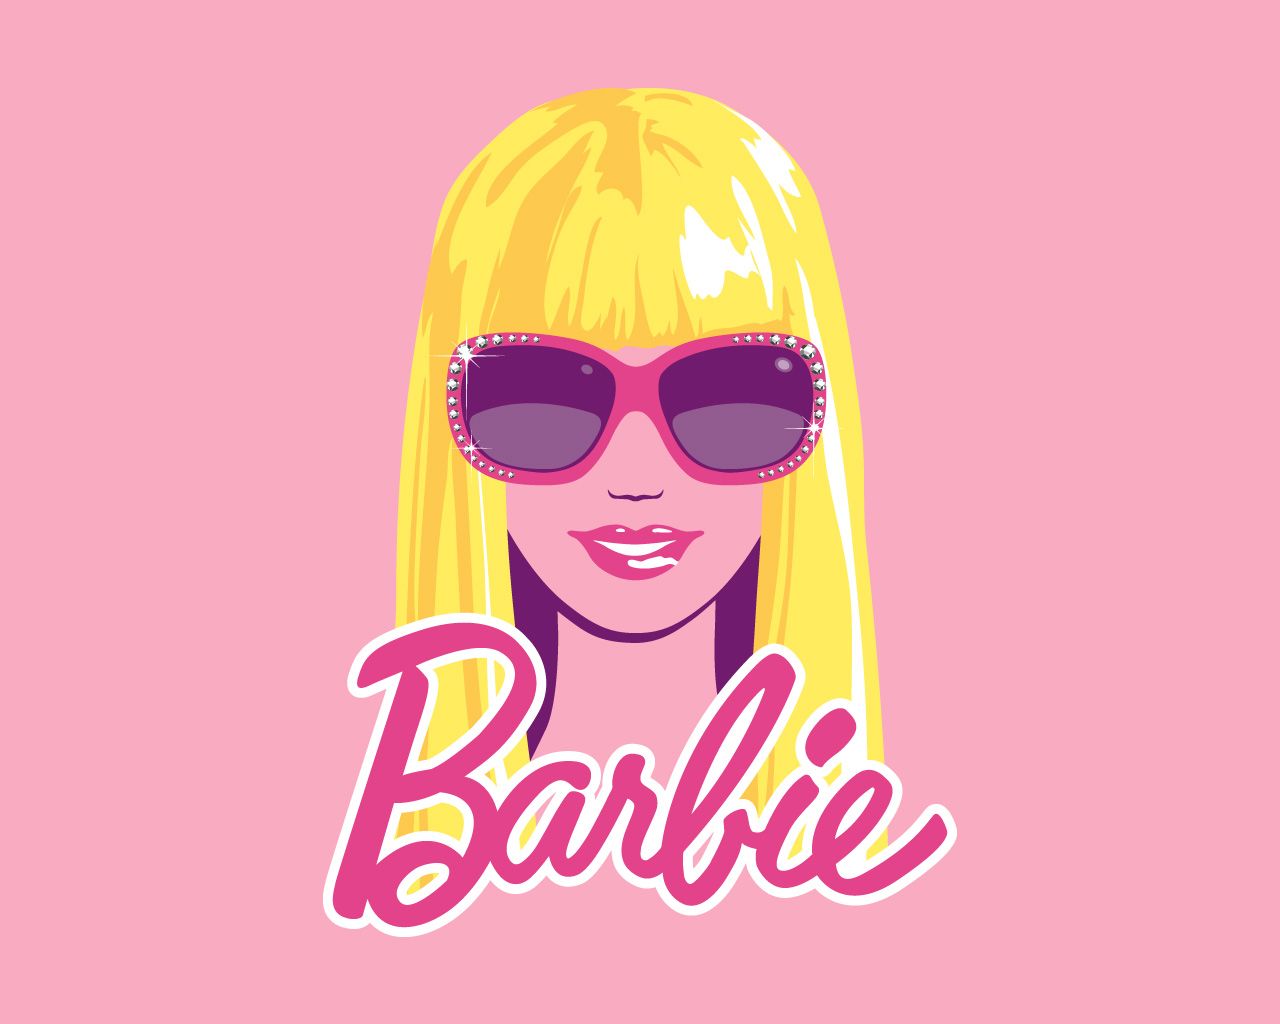 Barbie wallpaper barbie barbie images barbie logo barbie tumblr